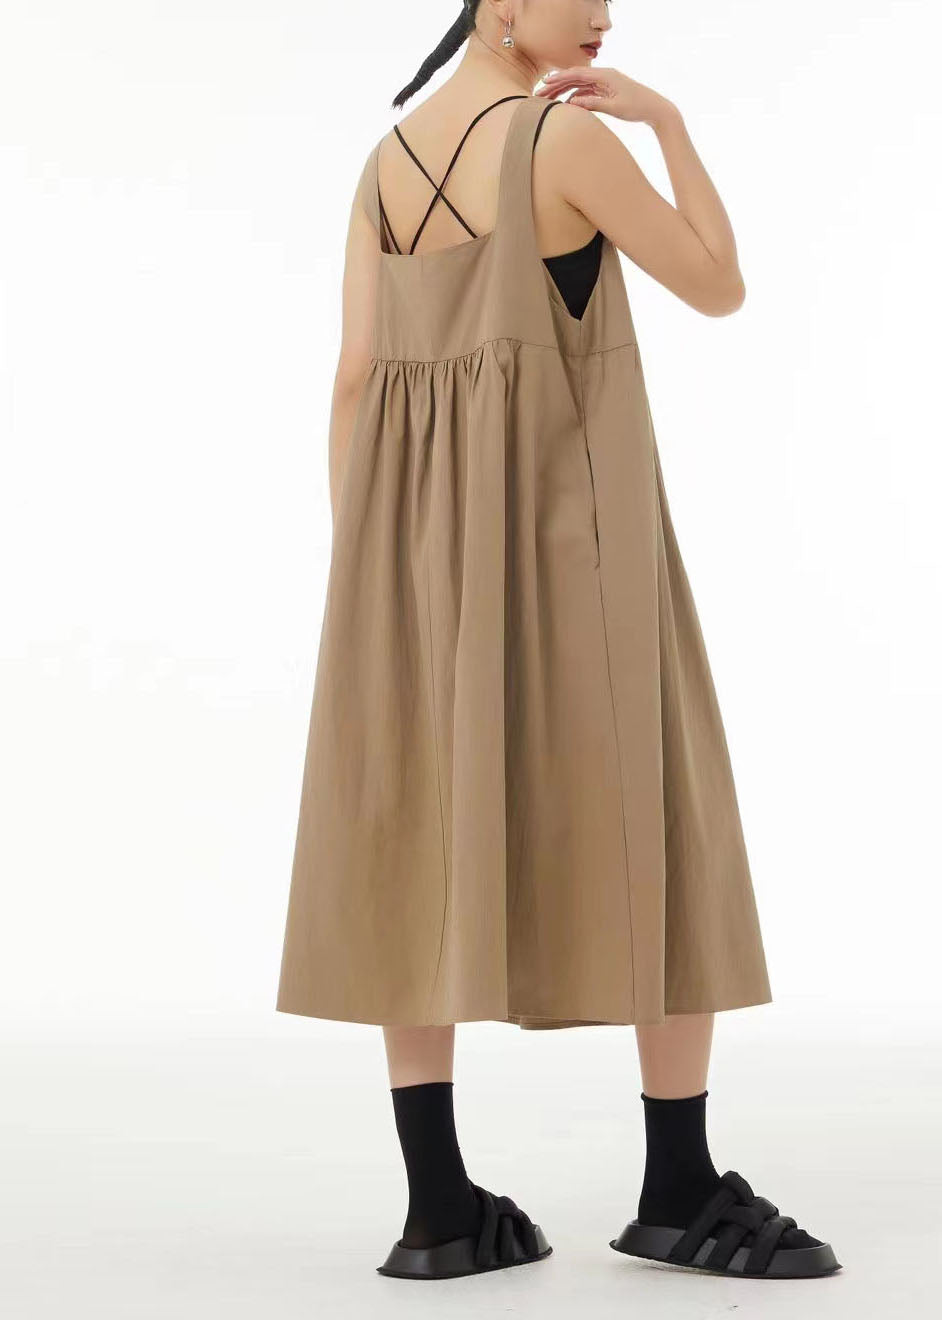 Modern Khaki Backless Patchwork Cotton A Line Dress Sleeveless TS1075